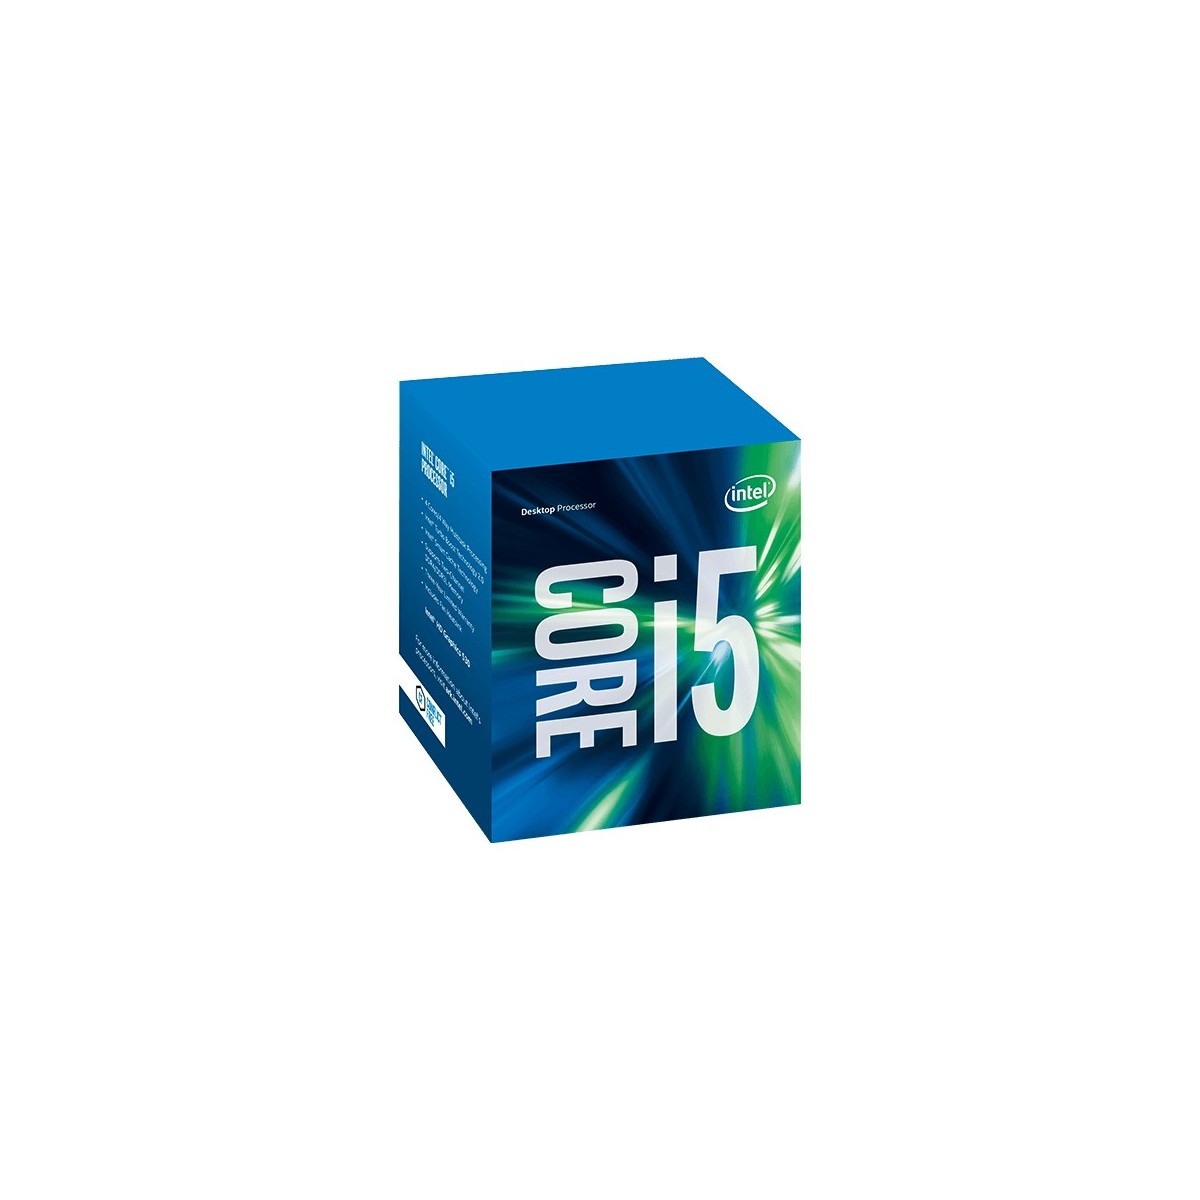 Intel Core i5-6500 Core i5 2.3 GHz - Skt 1151 Skylake